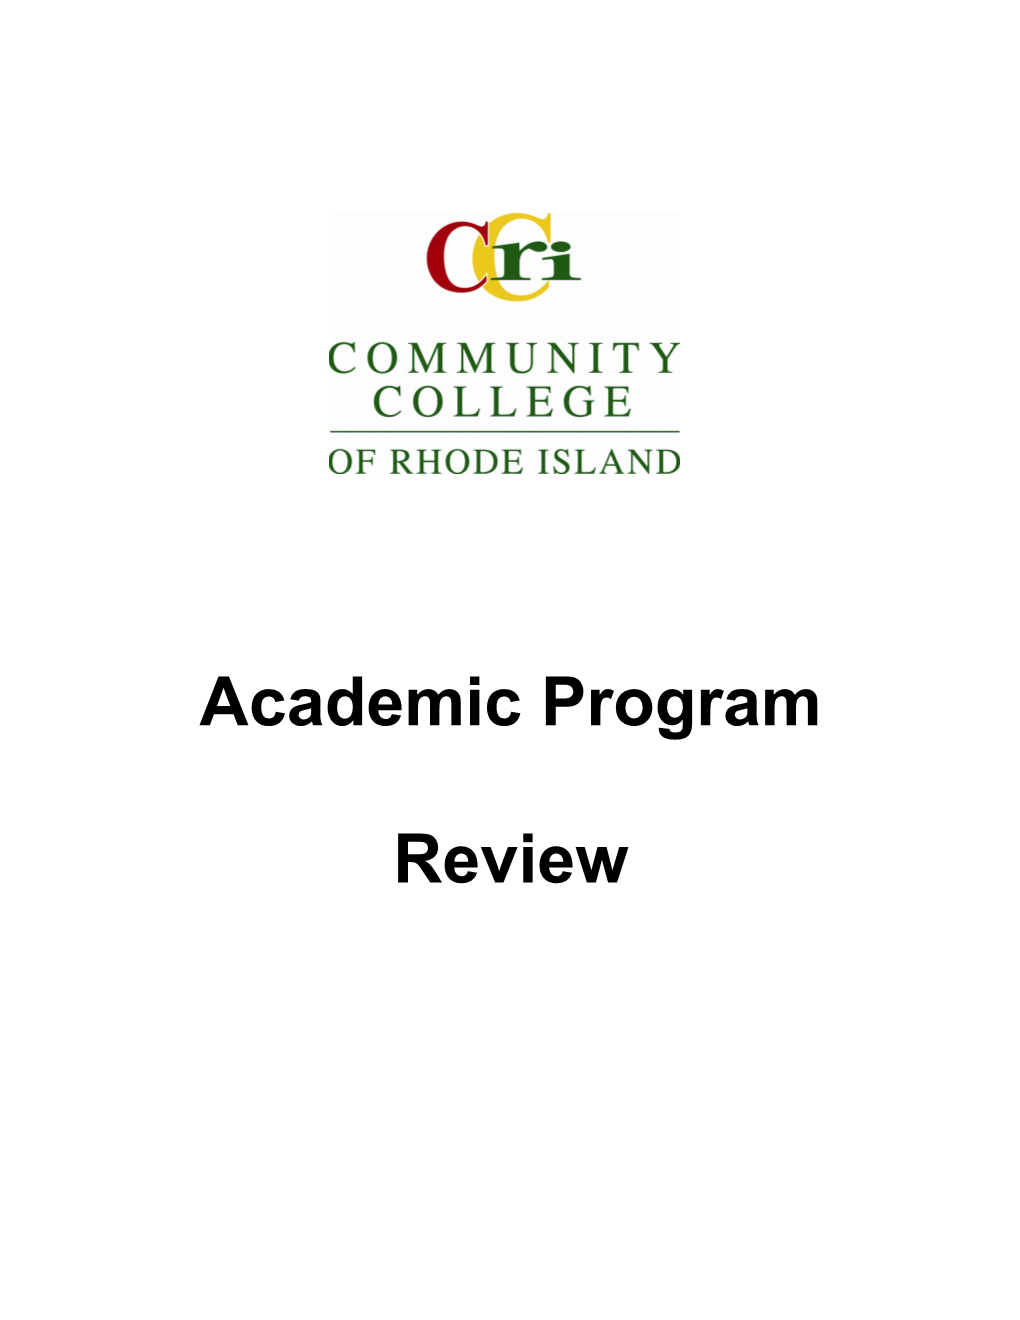 Academic Program Review Document 1-26-07